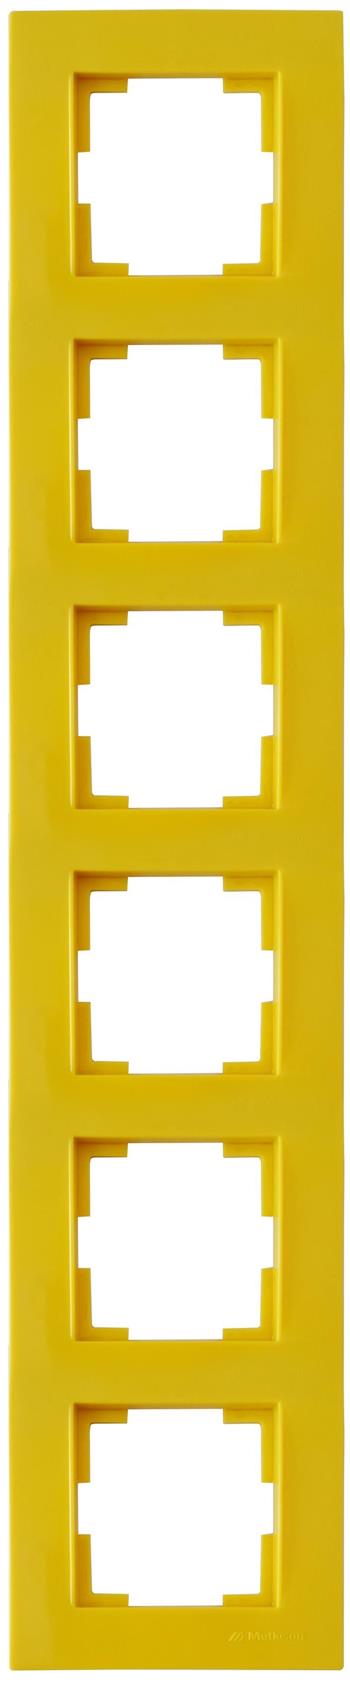 6fach Rahmen vertikal Gelb (RITA Pastell Farben)